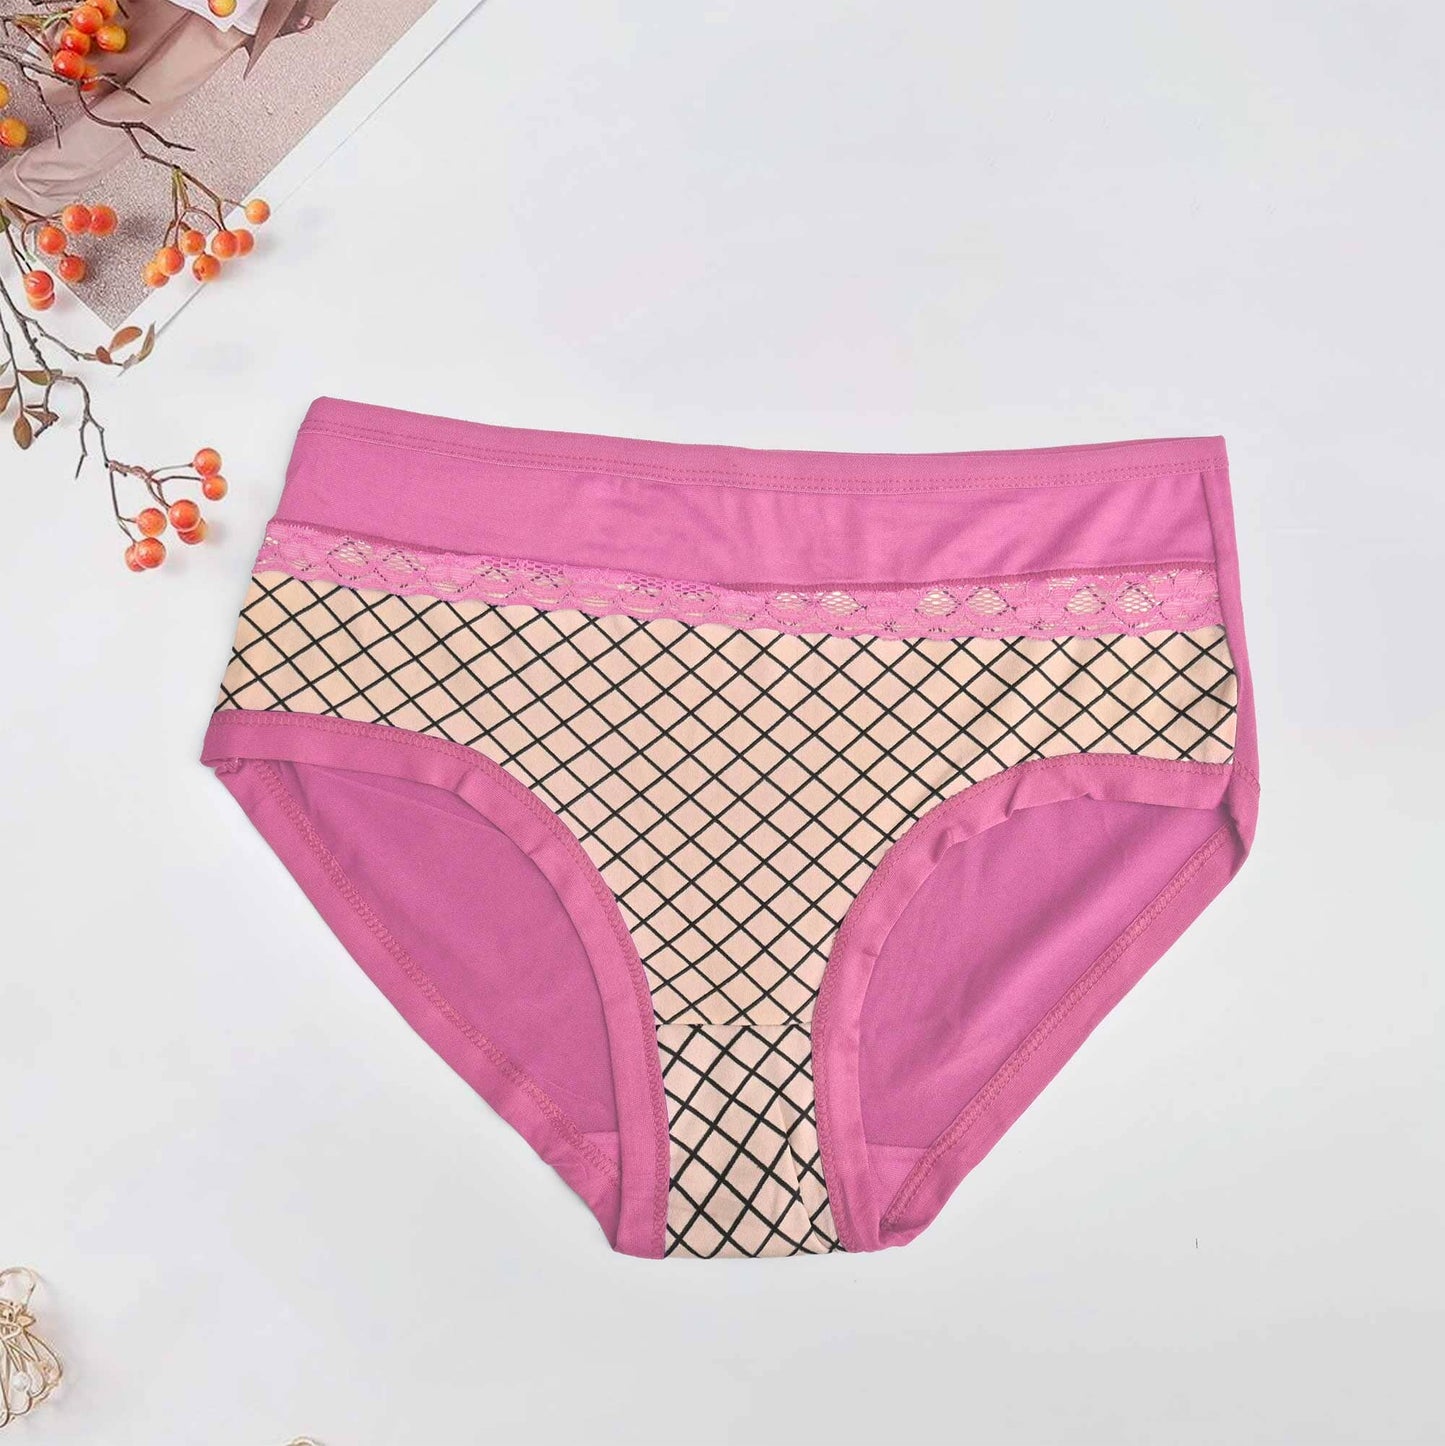 Shuifanxin Women's Lace Design Underwear Panties Women's Panties RAM Pink 30-34 inches 